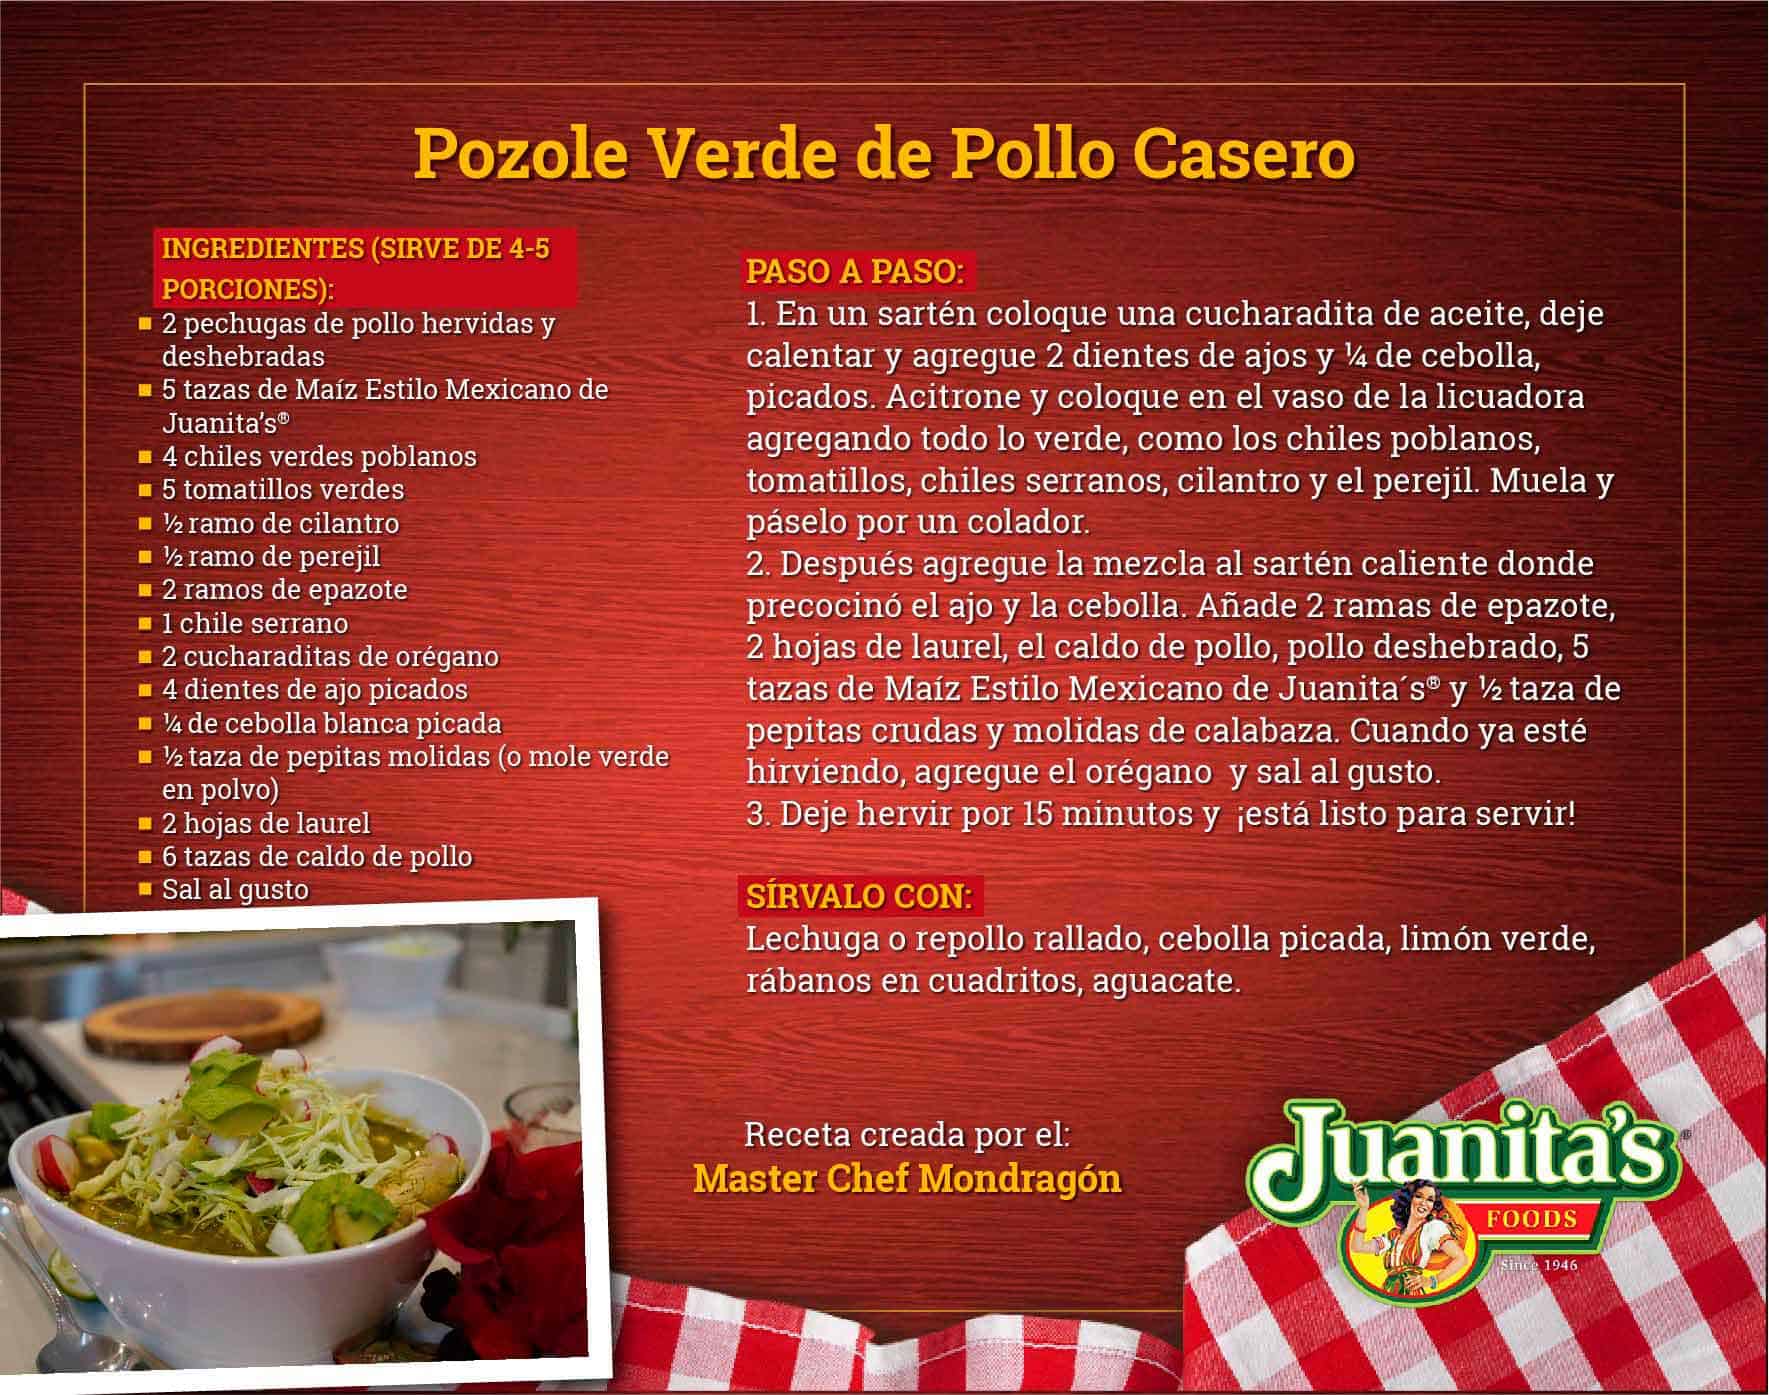 Pozole Verde de Pollo Casero | Juanita's Foods